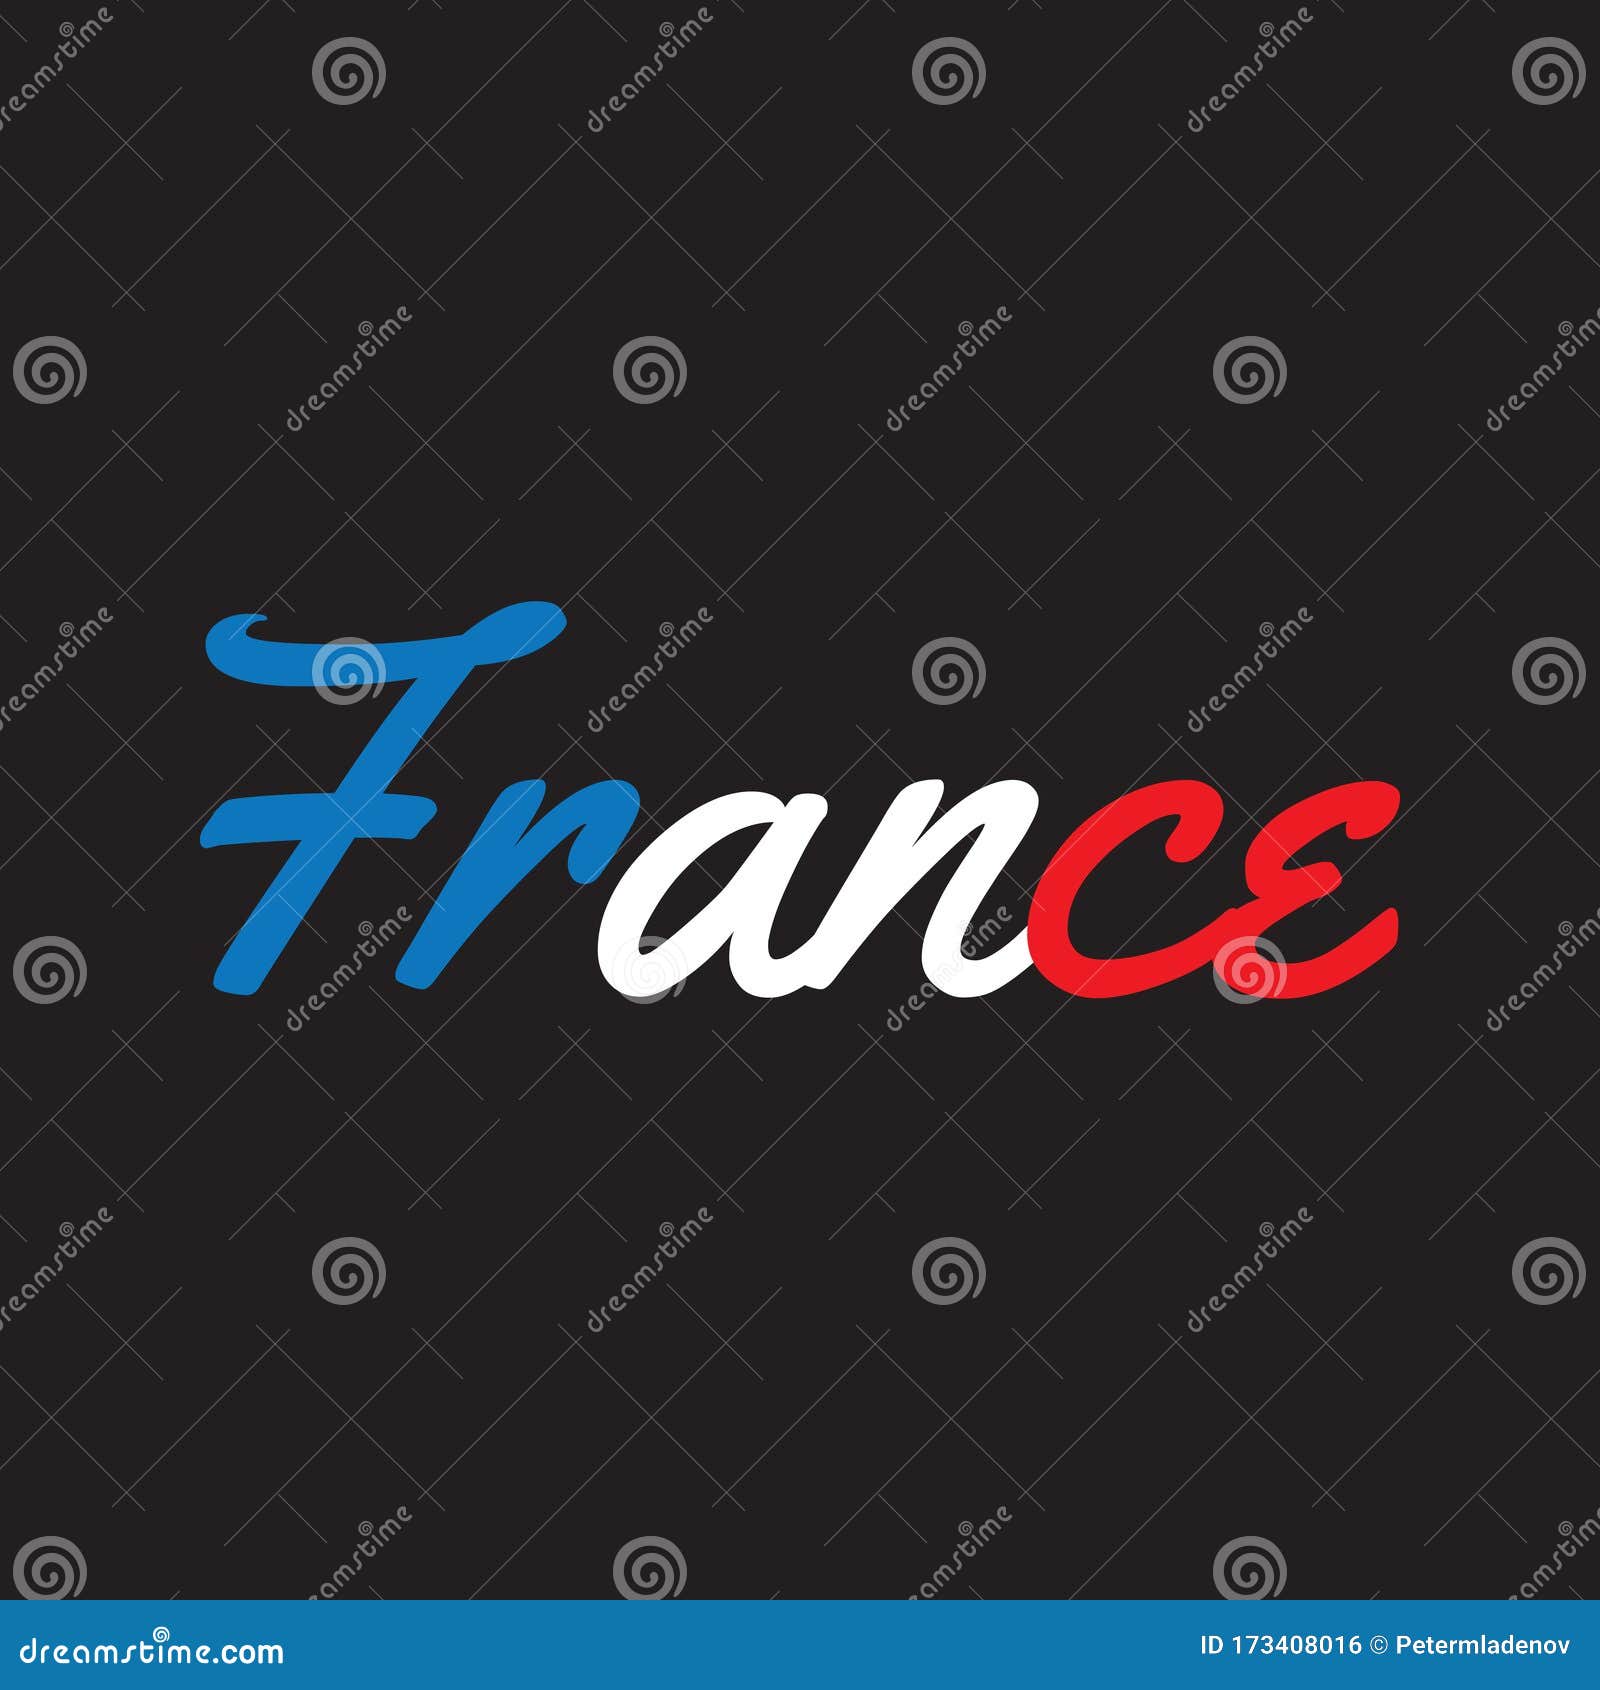 France Text Lettering in National Flag Colors - Vector Illustration ...